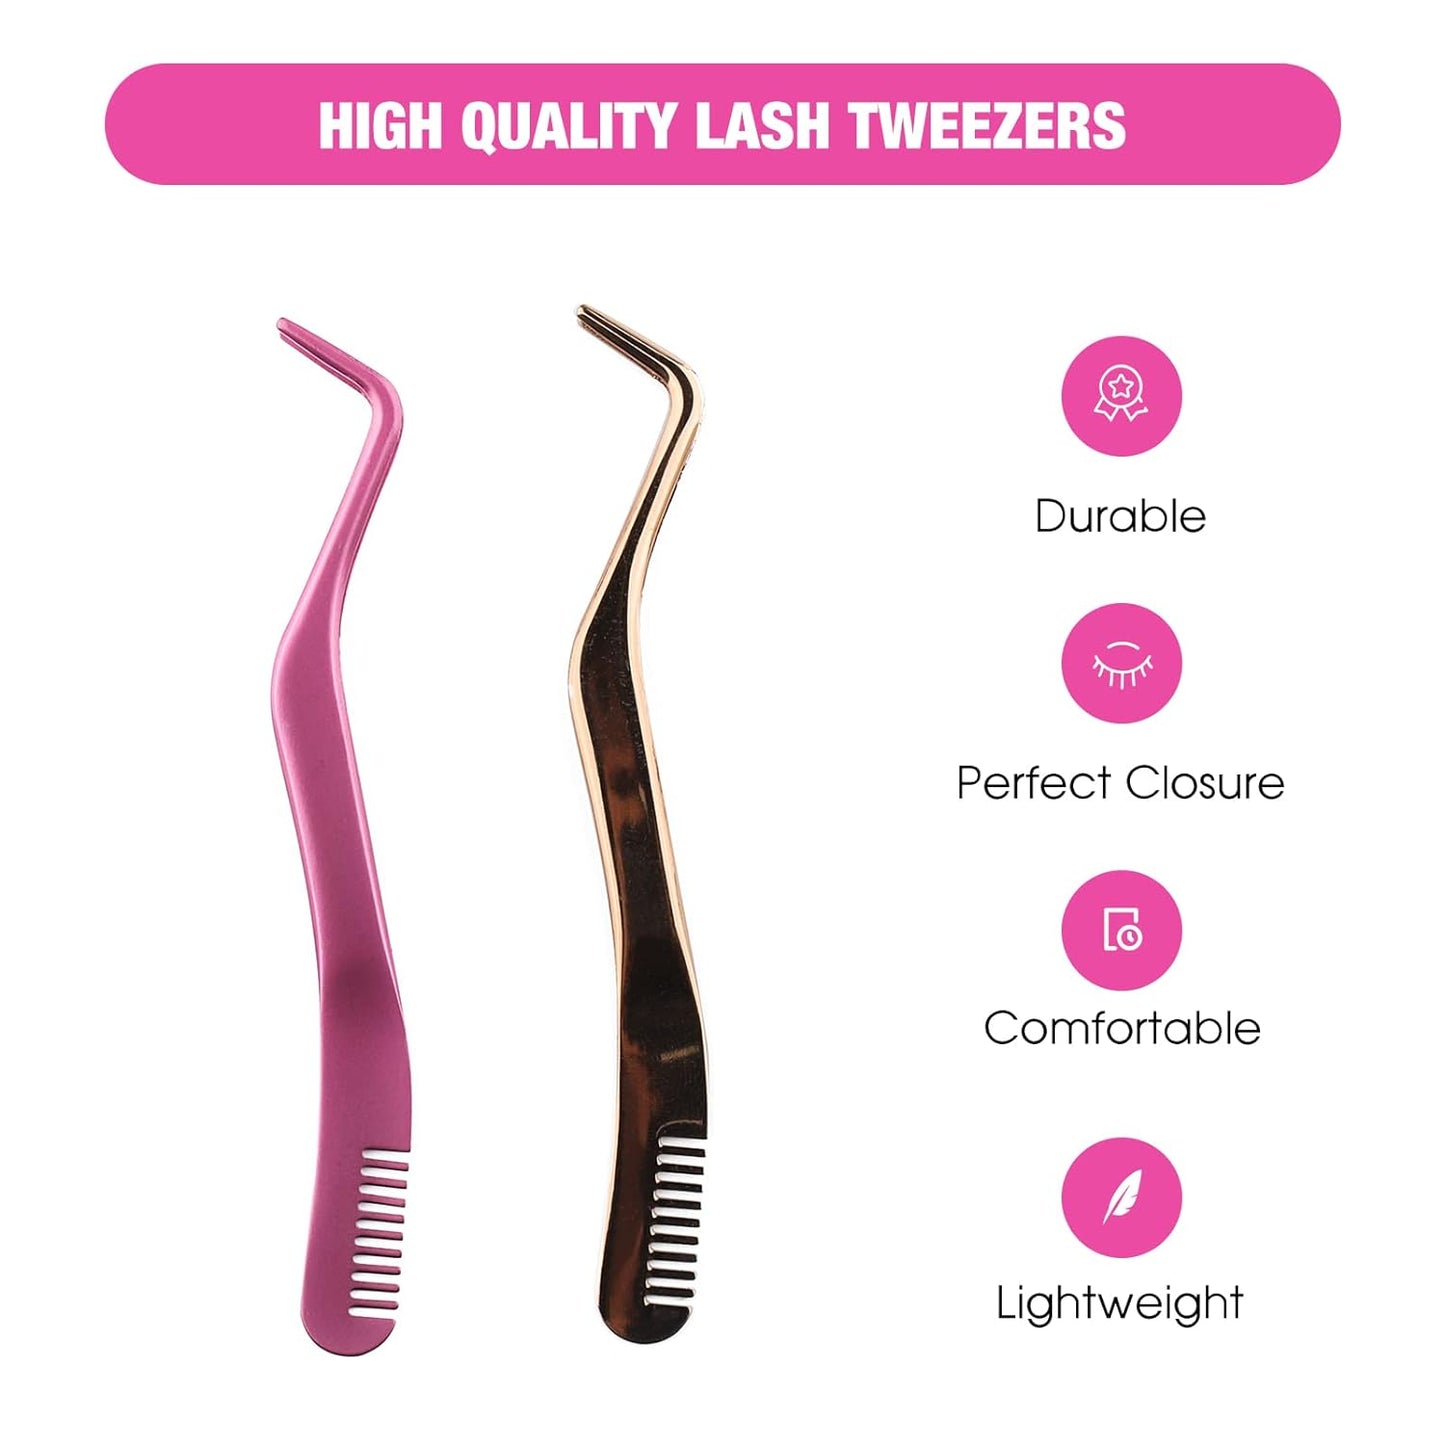 Lash Tweezers Lash Applicator for Individual Lashes DIY Eyelash Extension